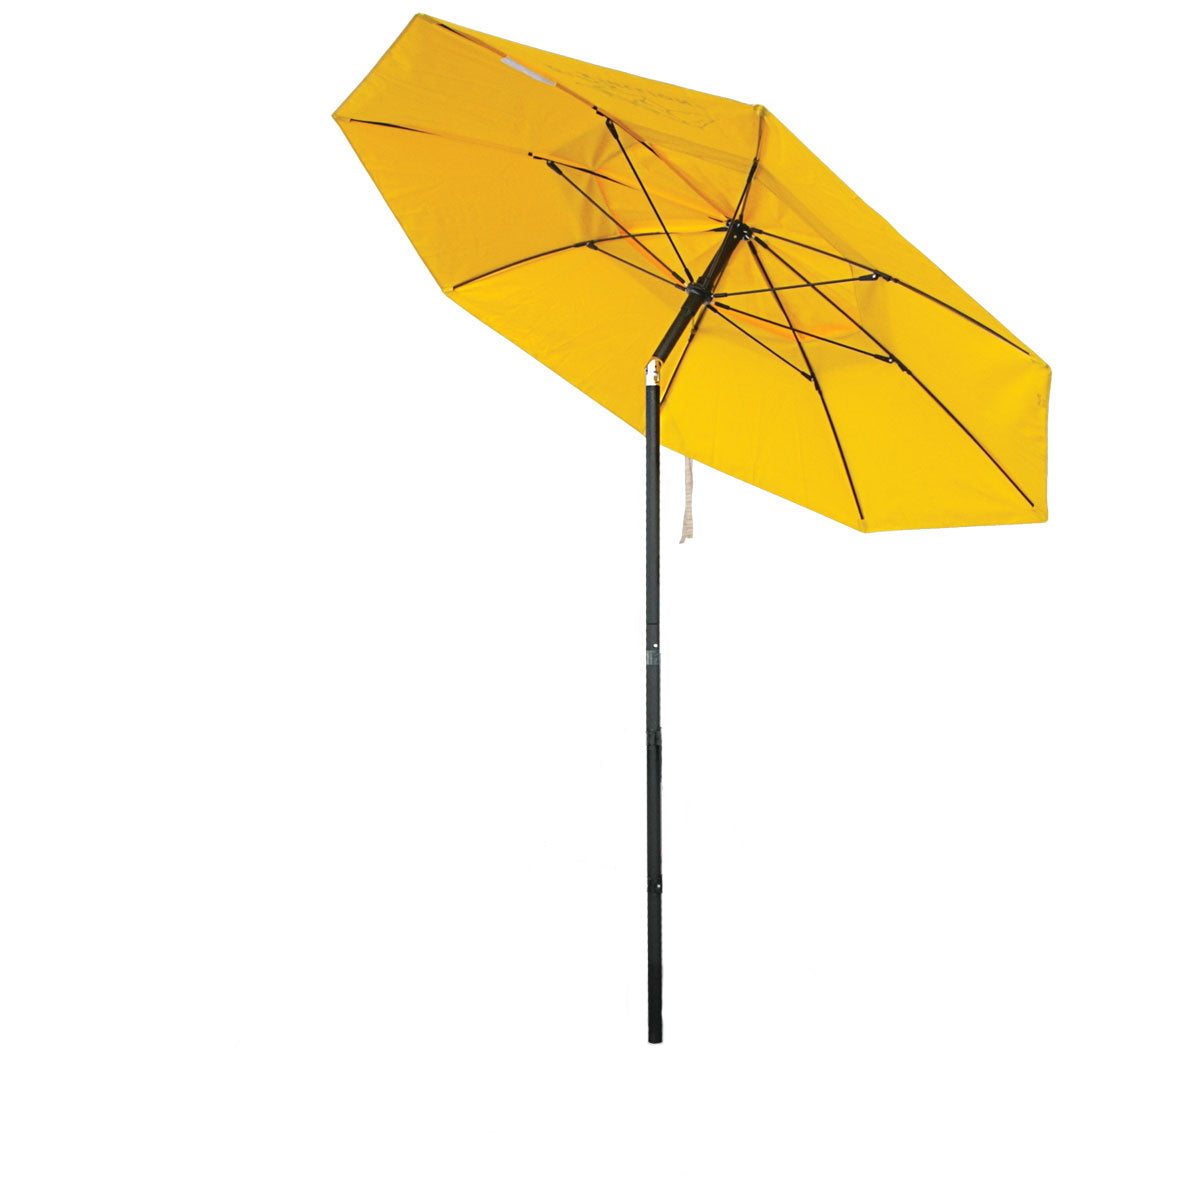 Revco Black Stallion Yellow FR Industrial Umbrella w/out Stand (UB100)